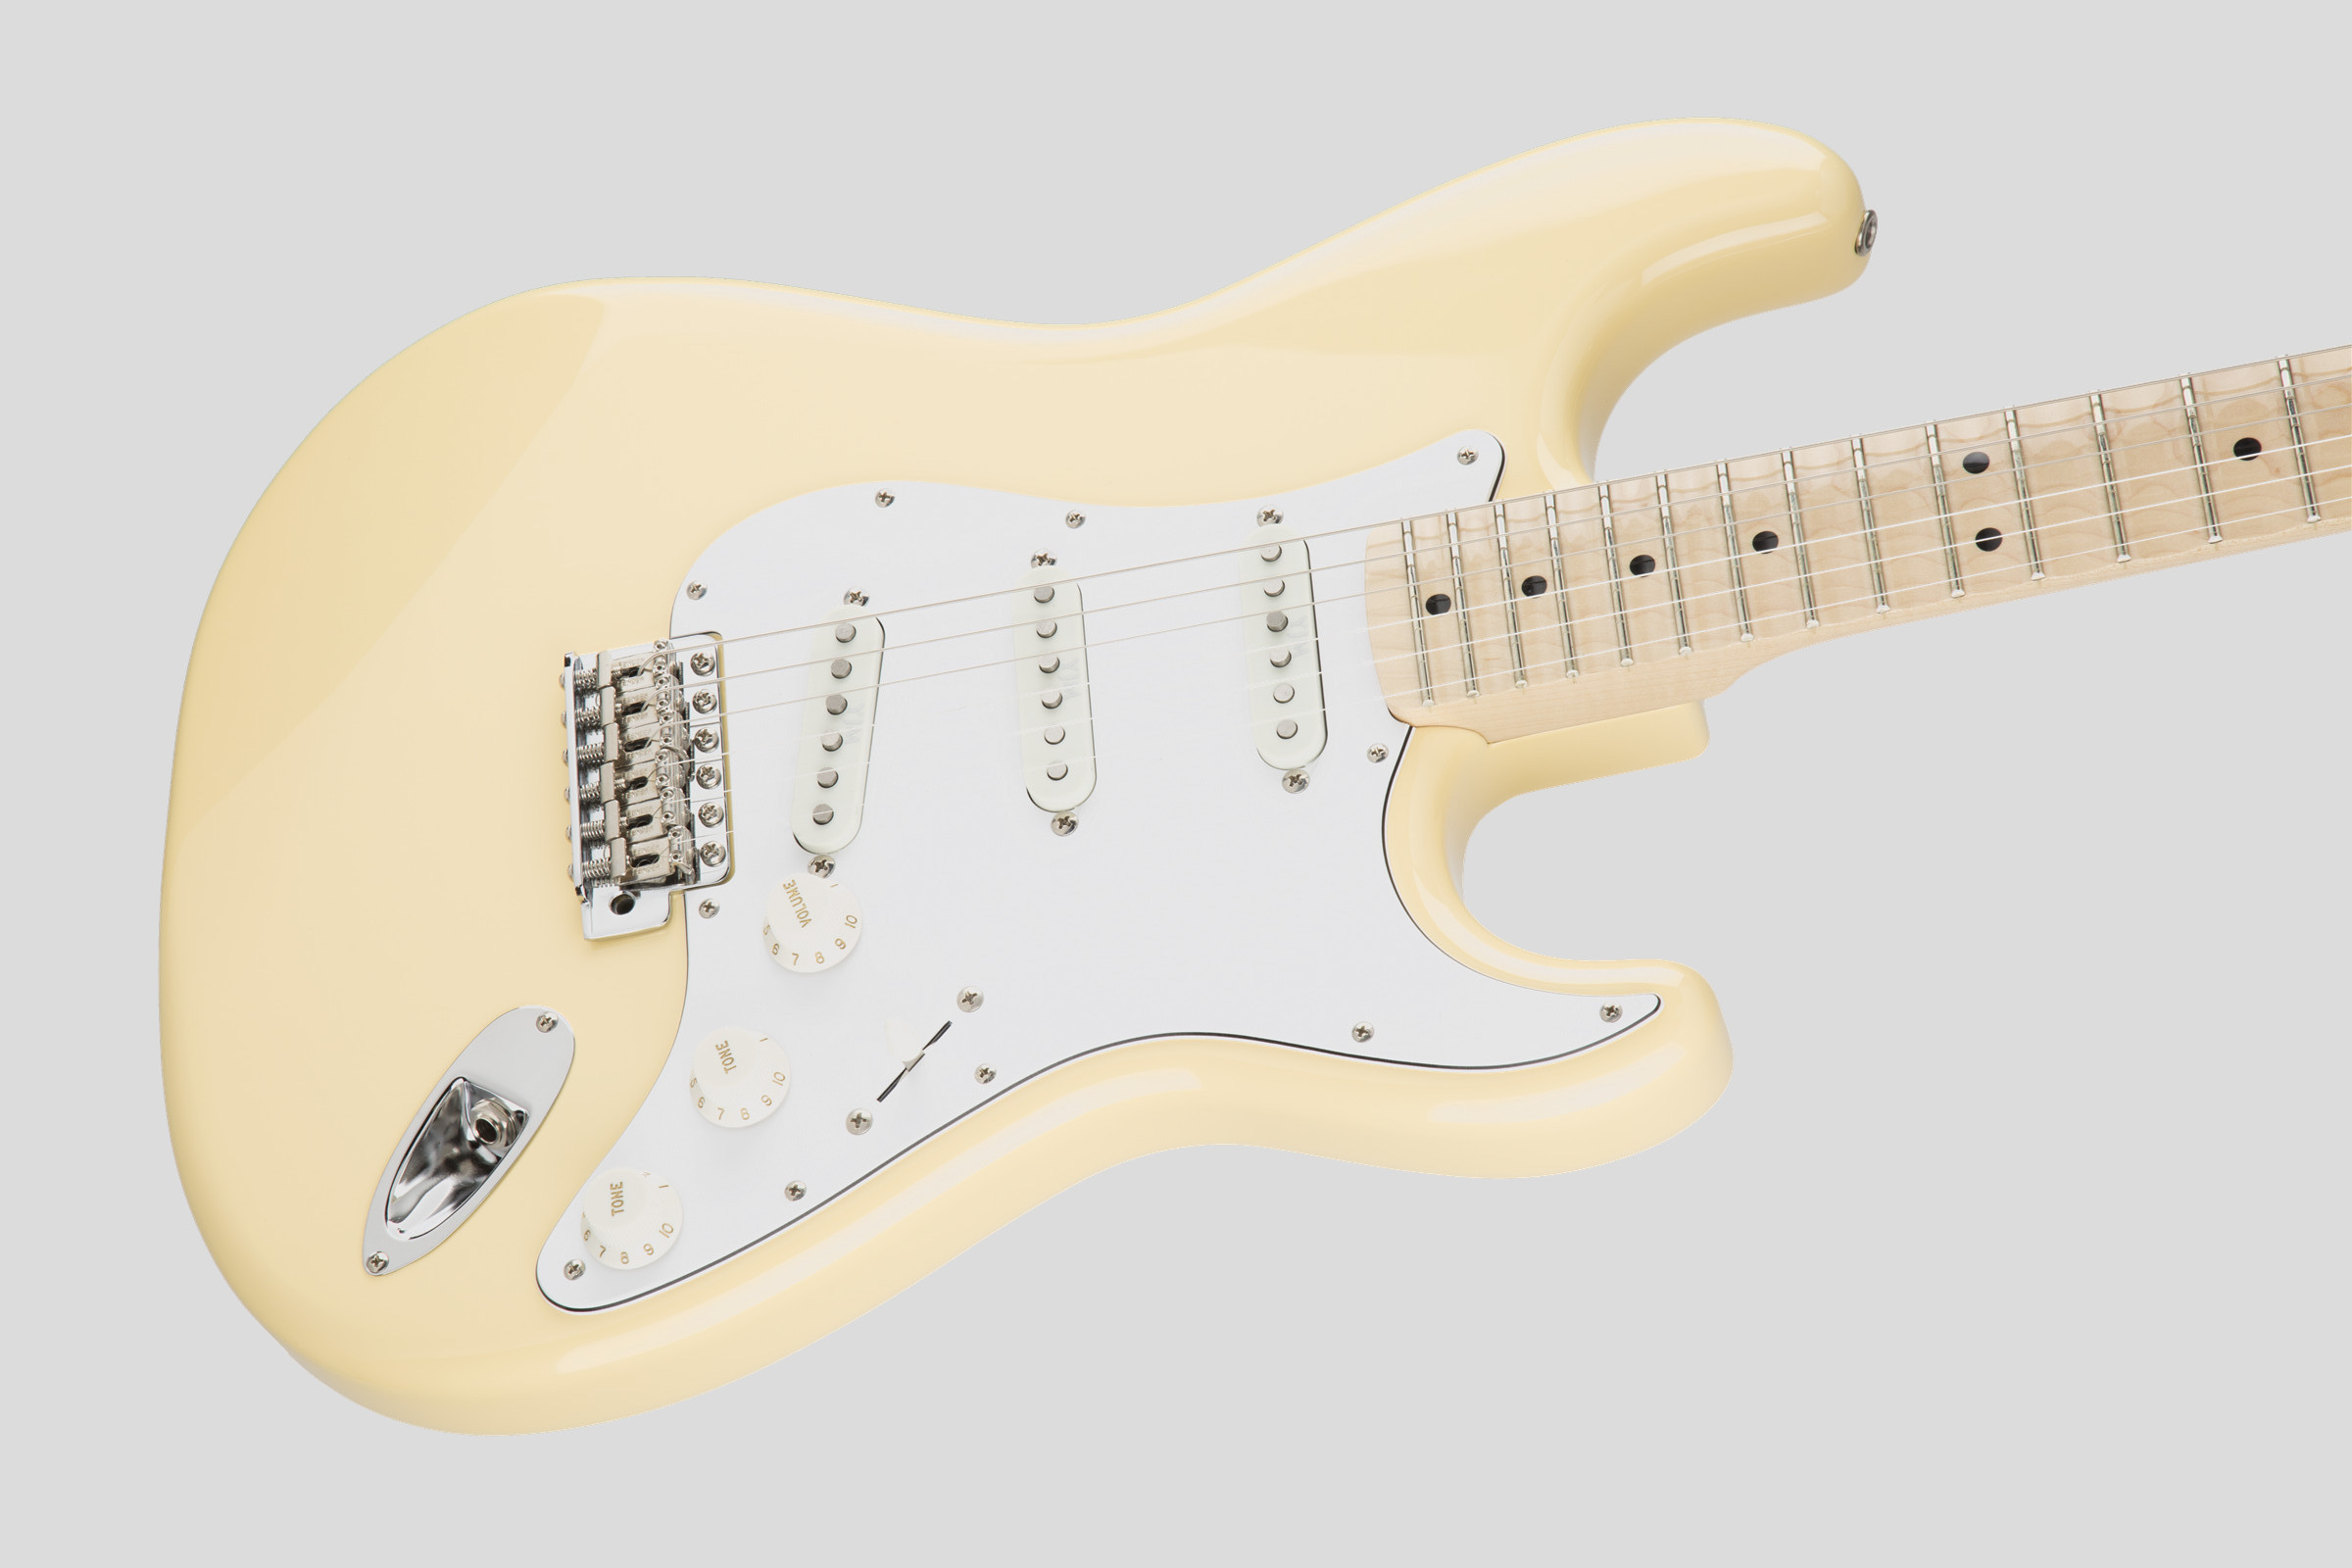 Fender Yngwie Malmsteen Japan Stratocaster Vintage White 3